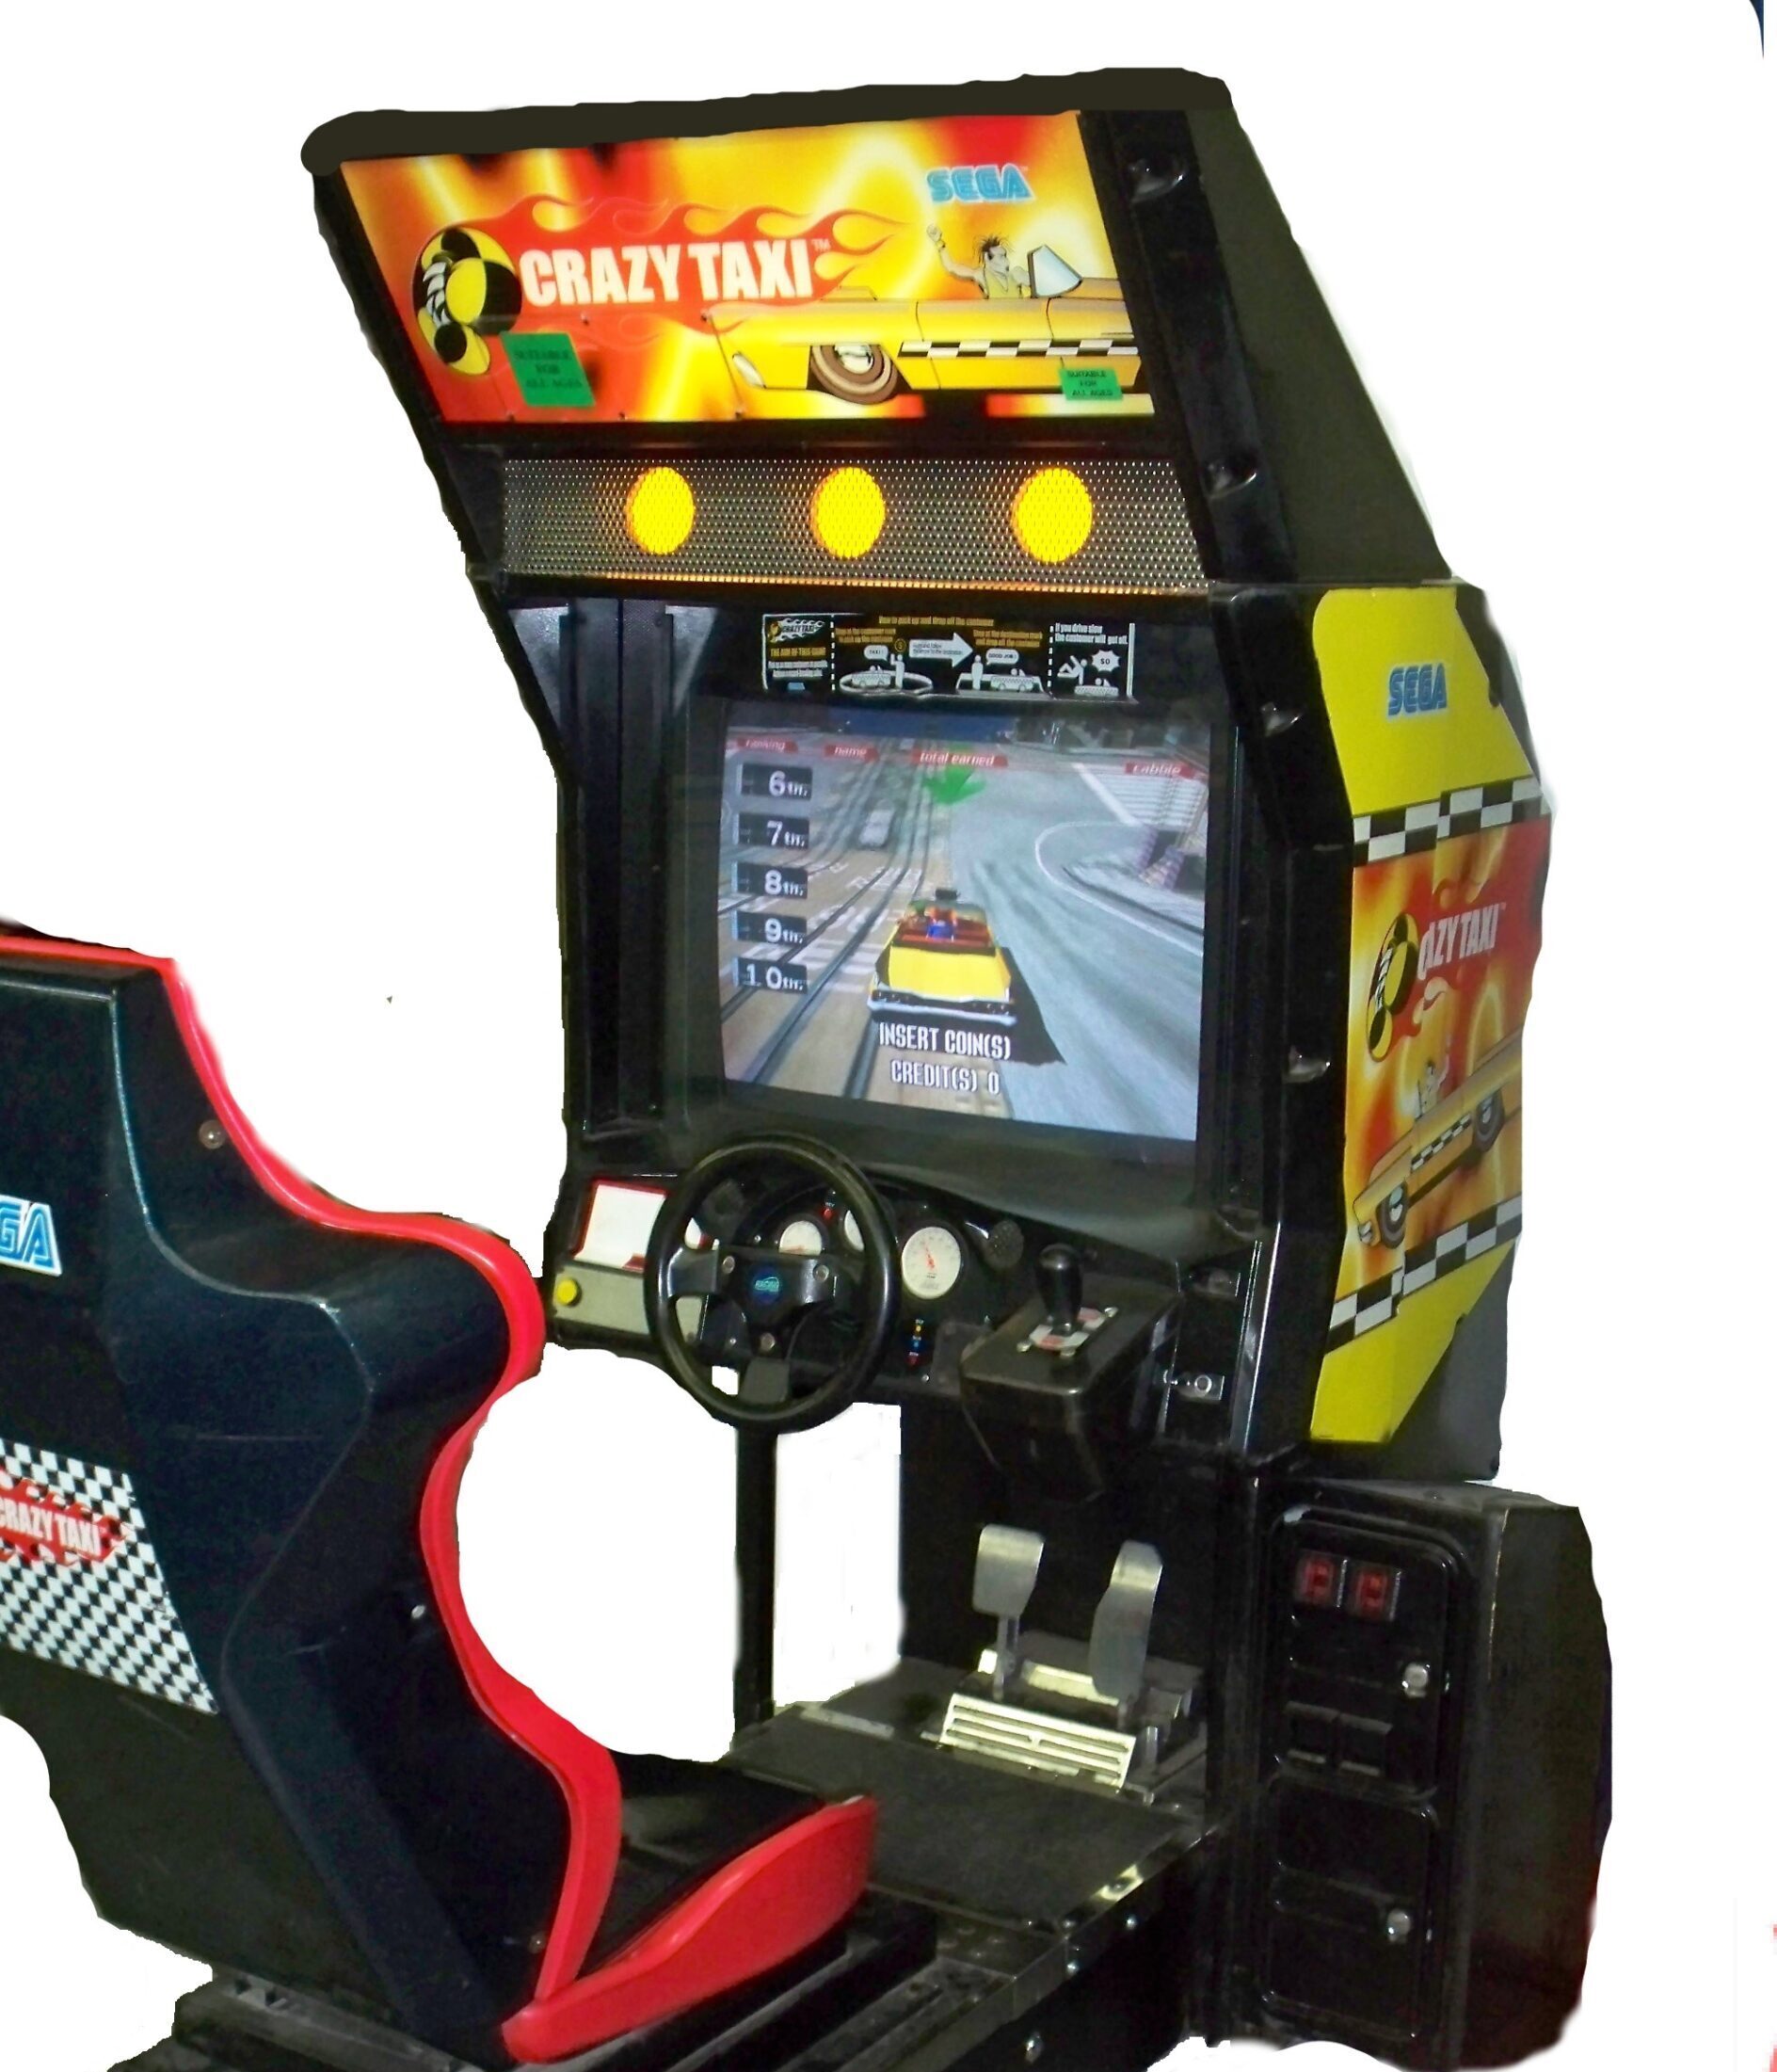 Crazy Taxi Box Shot for Arcade Games - GameFAQs